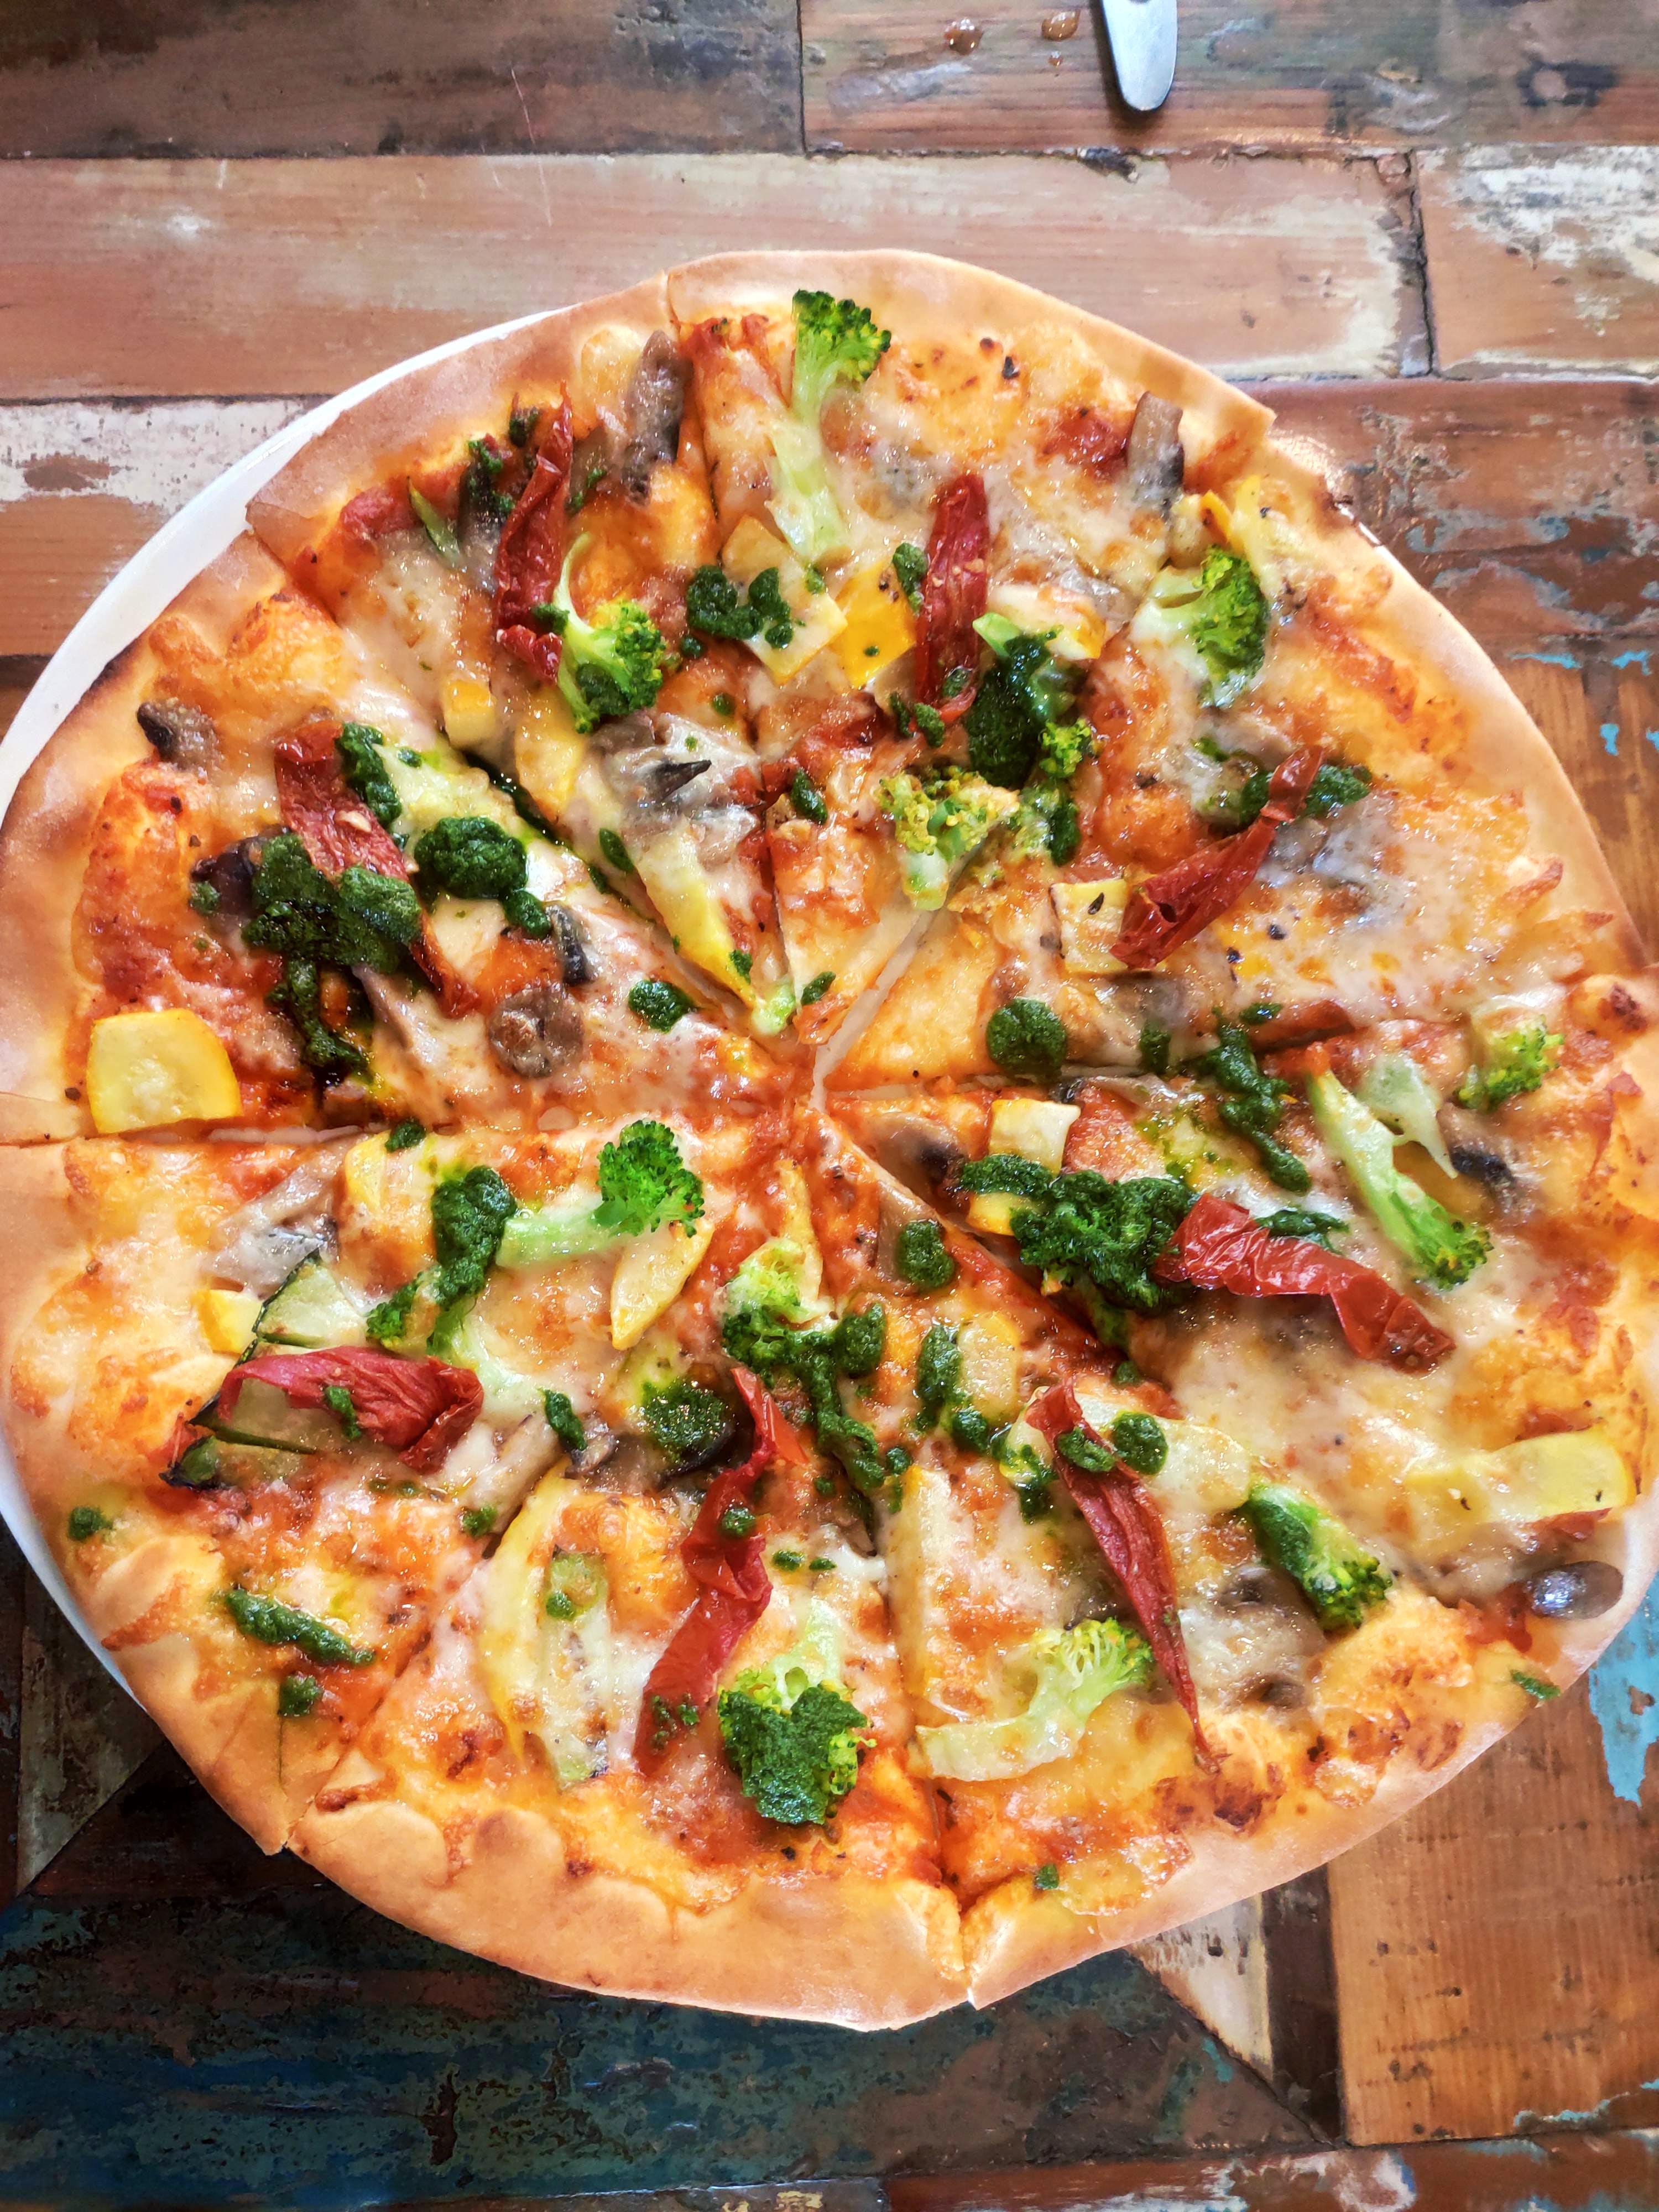 Dish,Food,Cuisine,Pizza,California-style pizza,Flatbread,Ingredient,Pizza cheese,Tarte flambée,Italian food